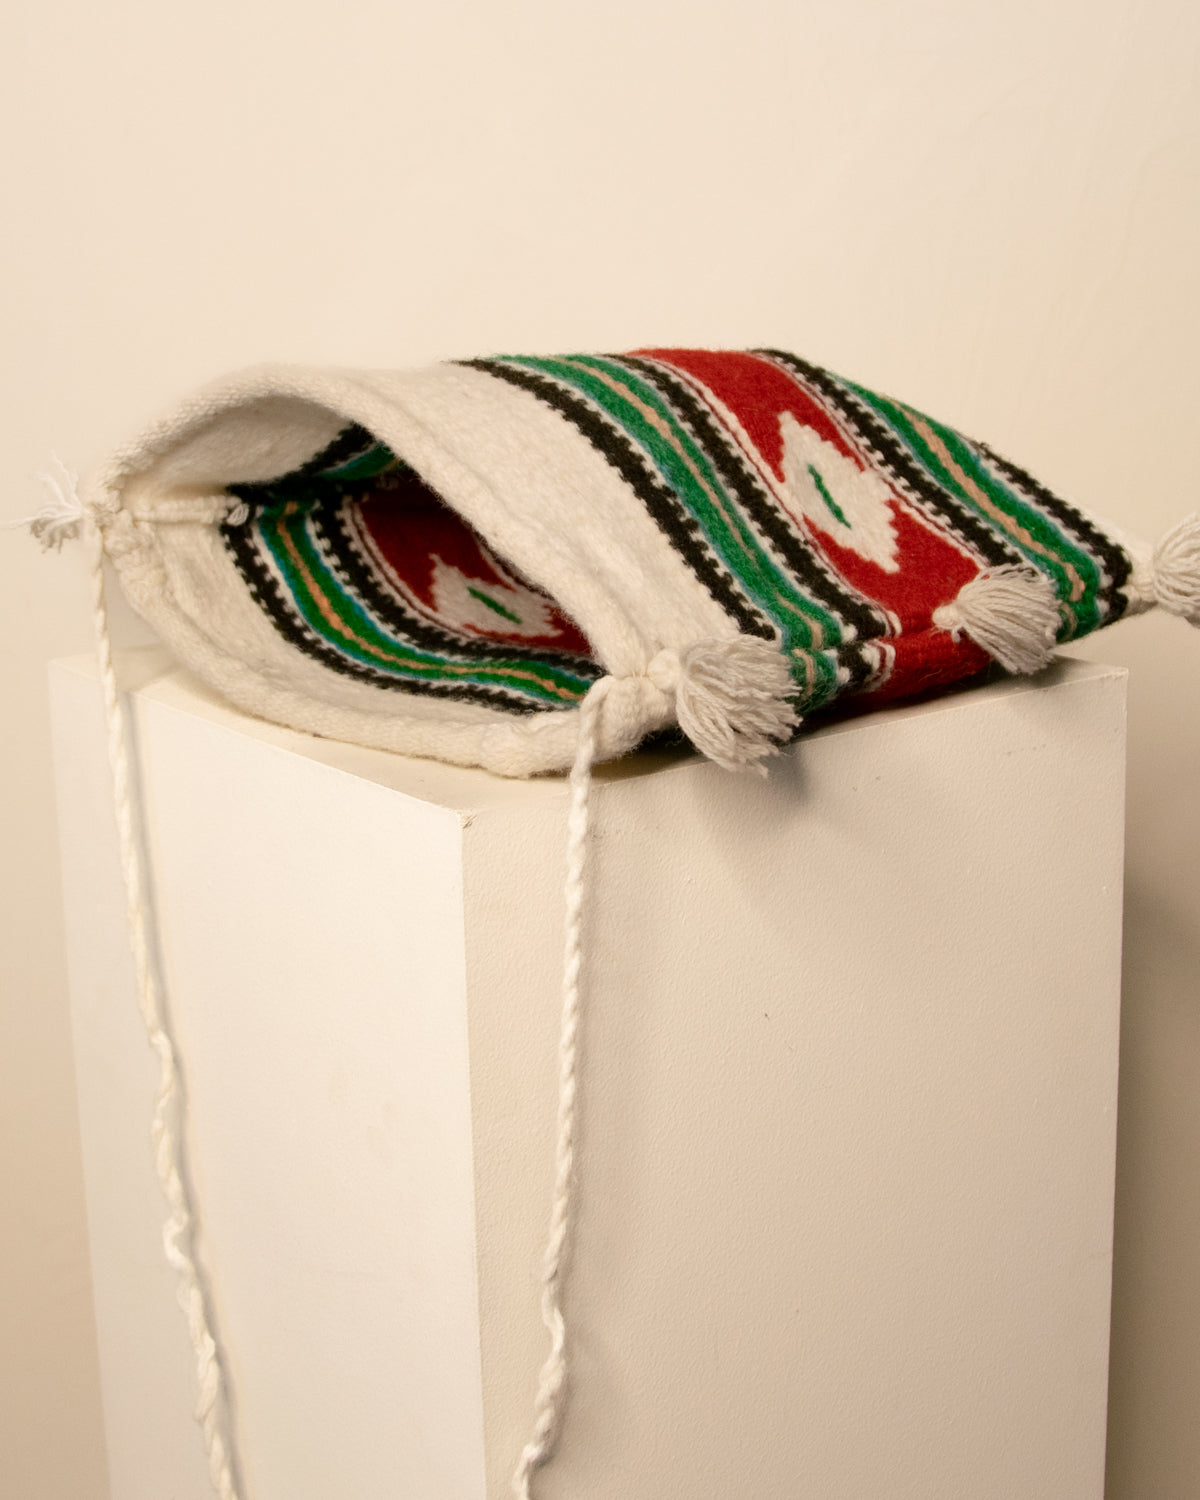 Handmade Afghan Bag